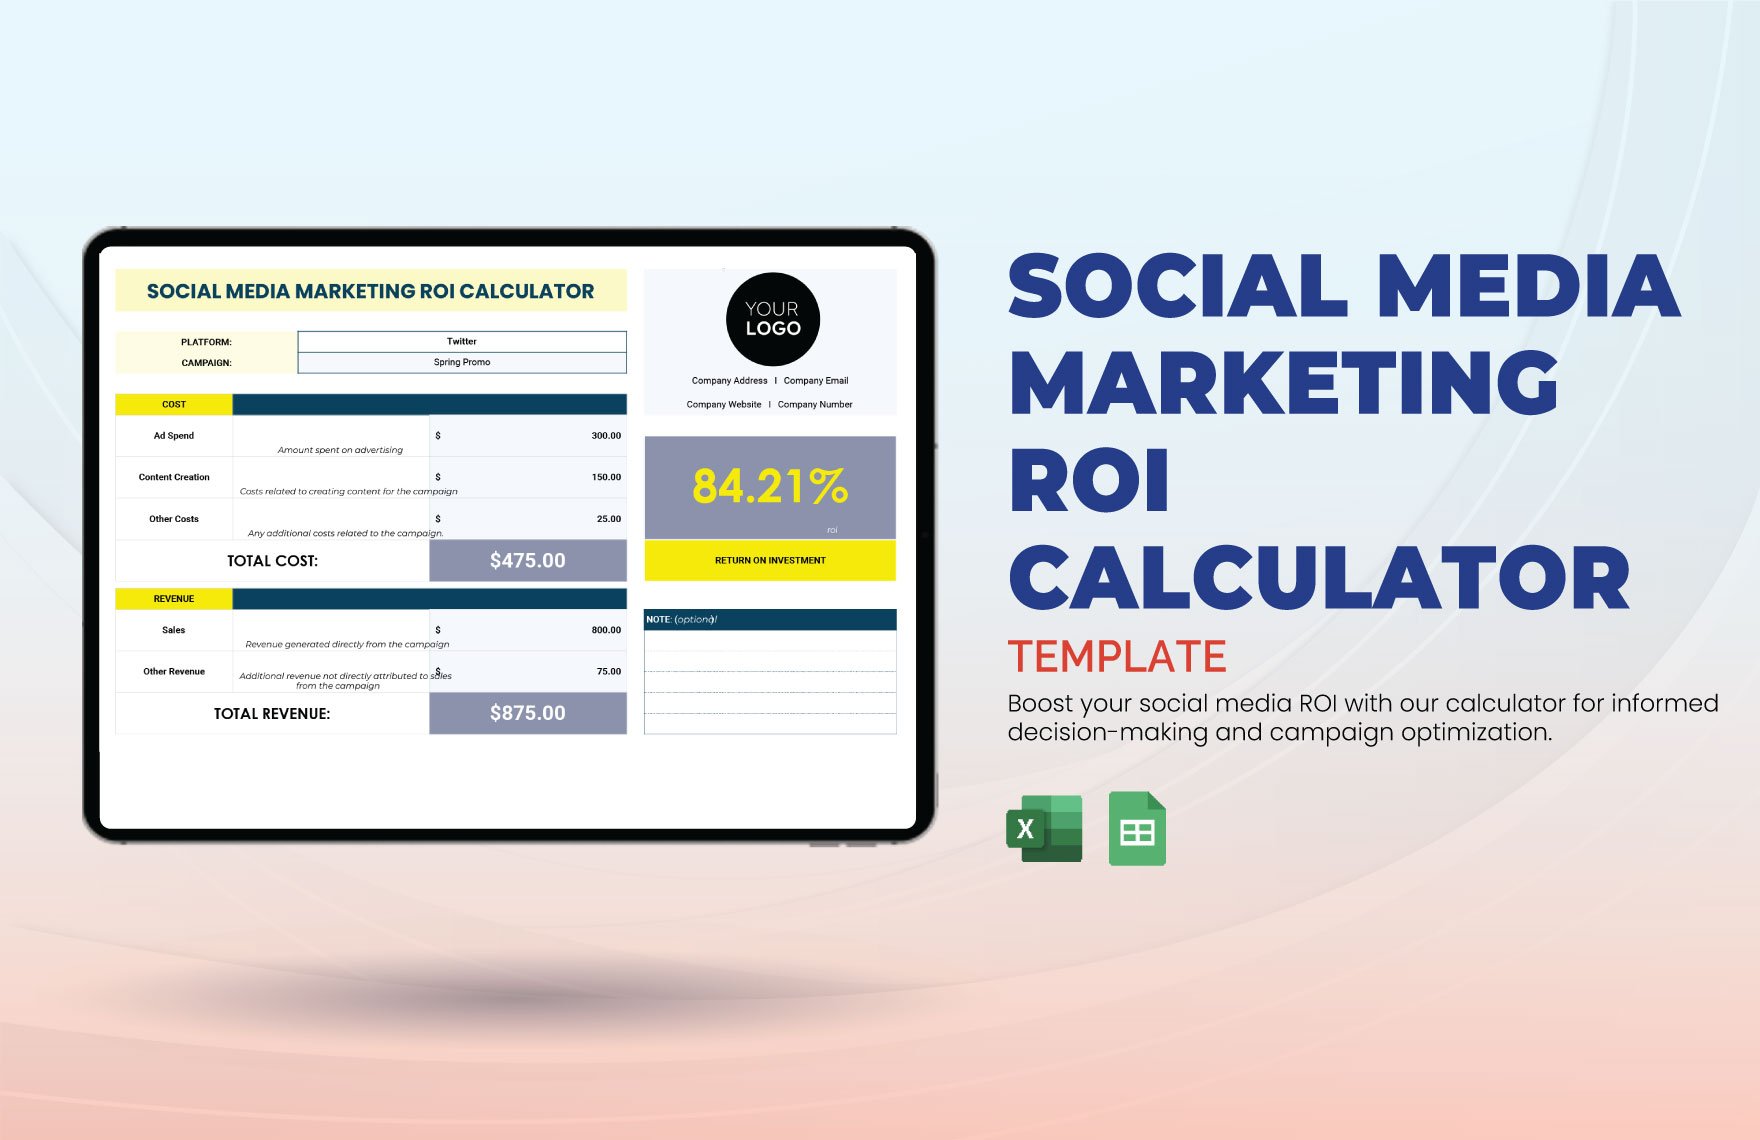 Social Media Marketing ROI Calculator Template